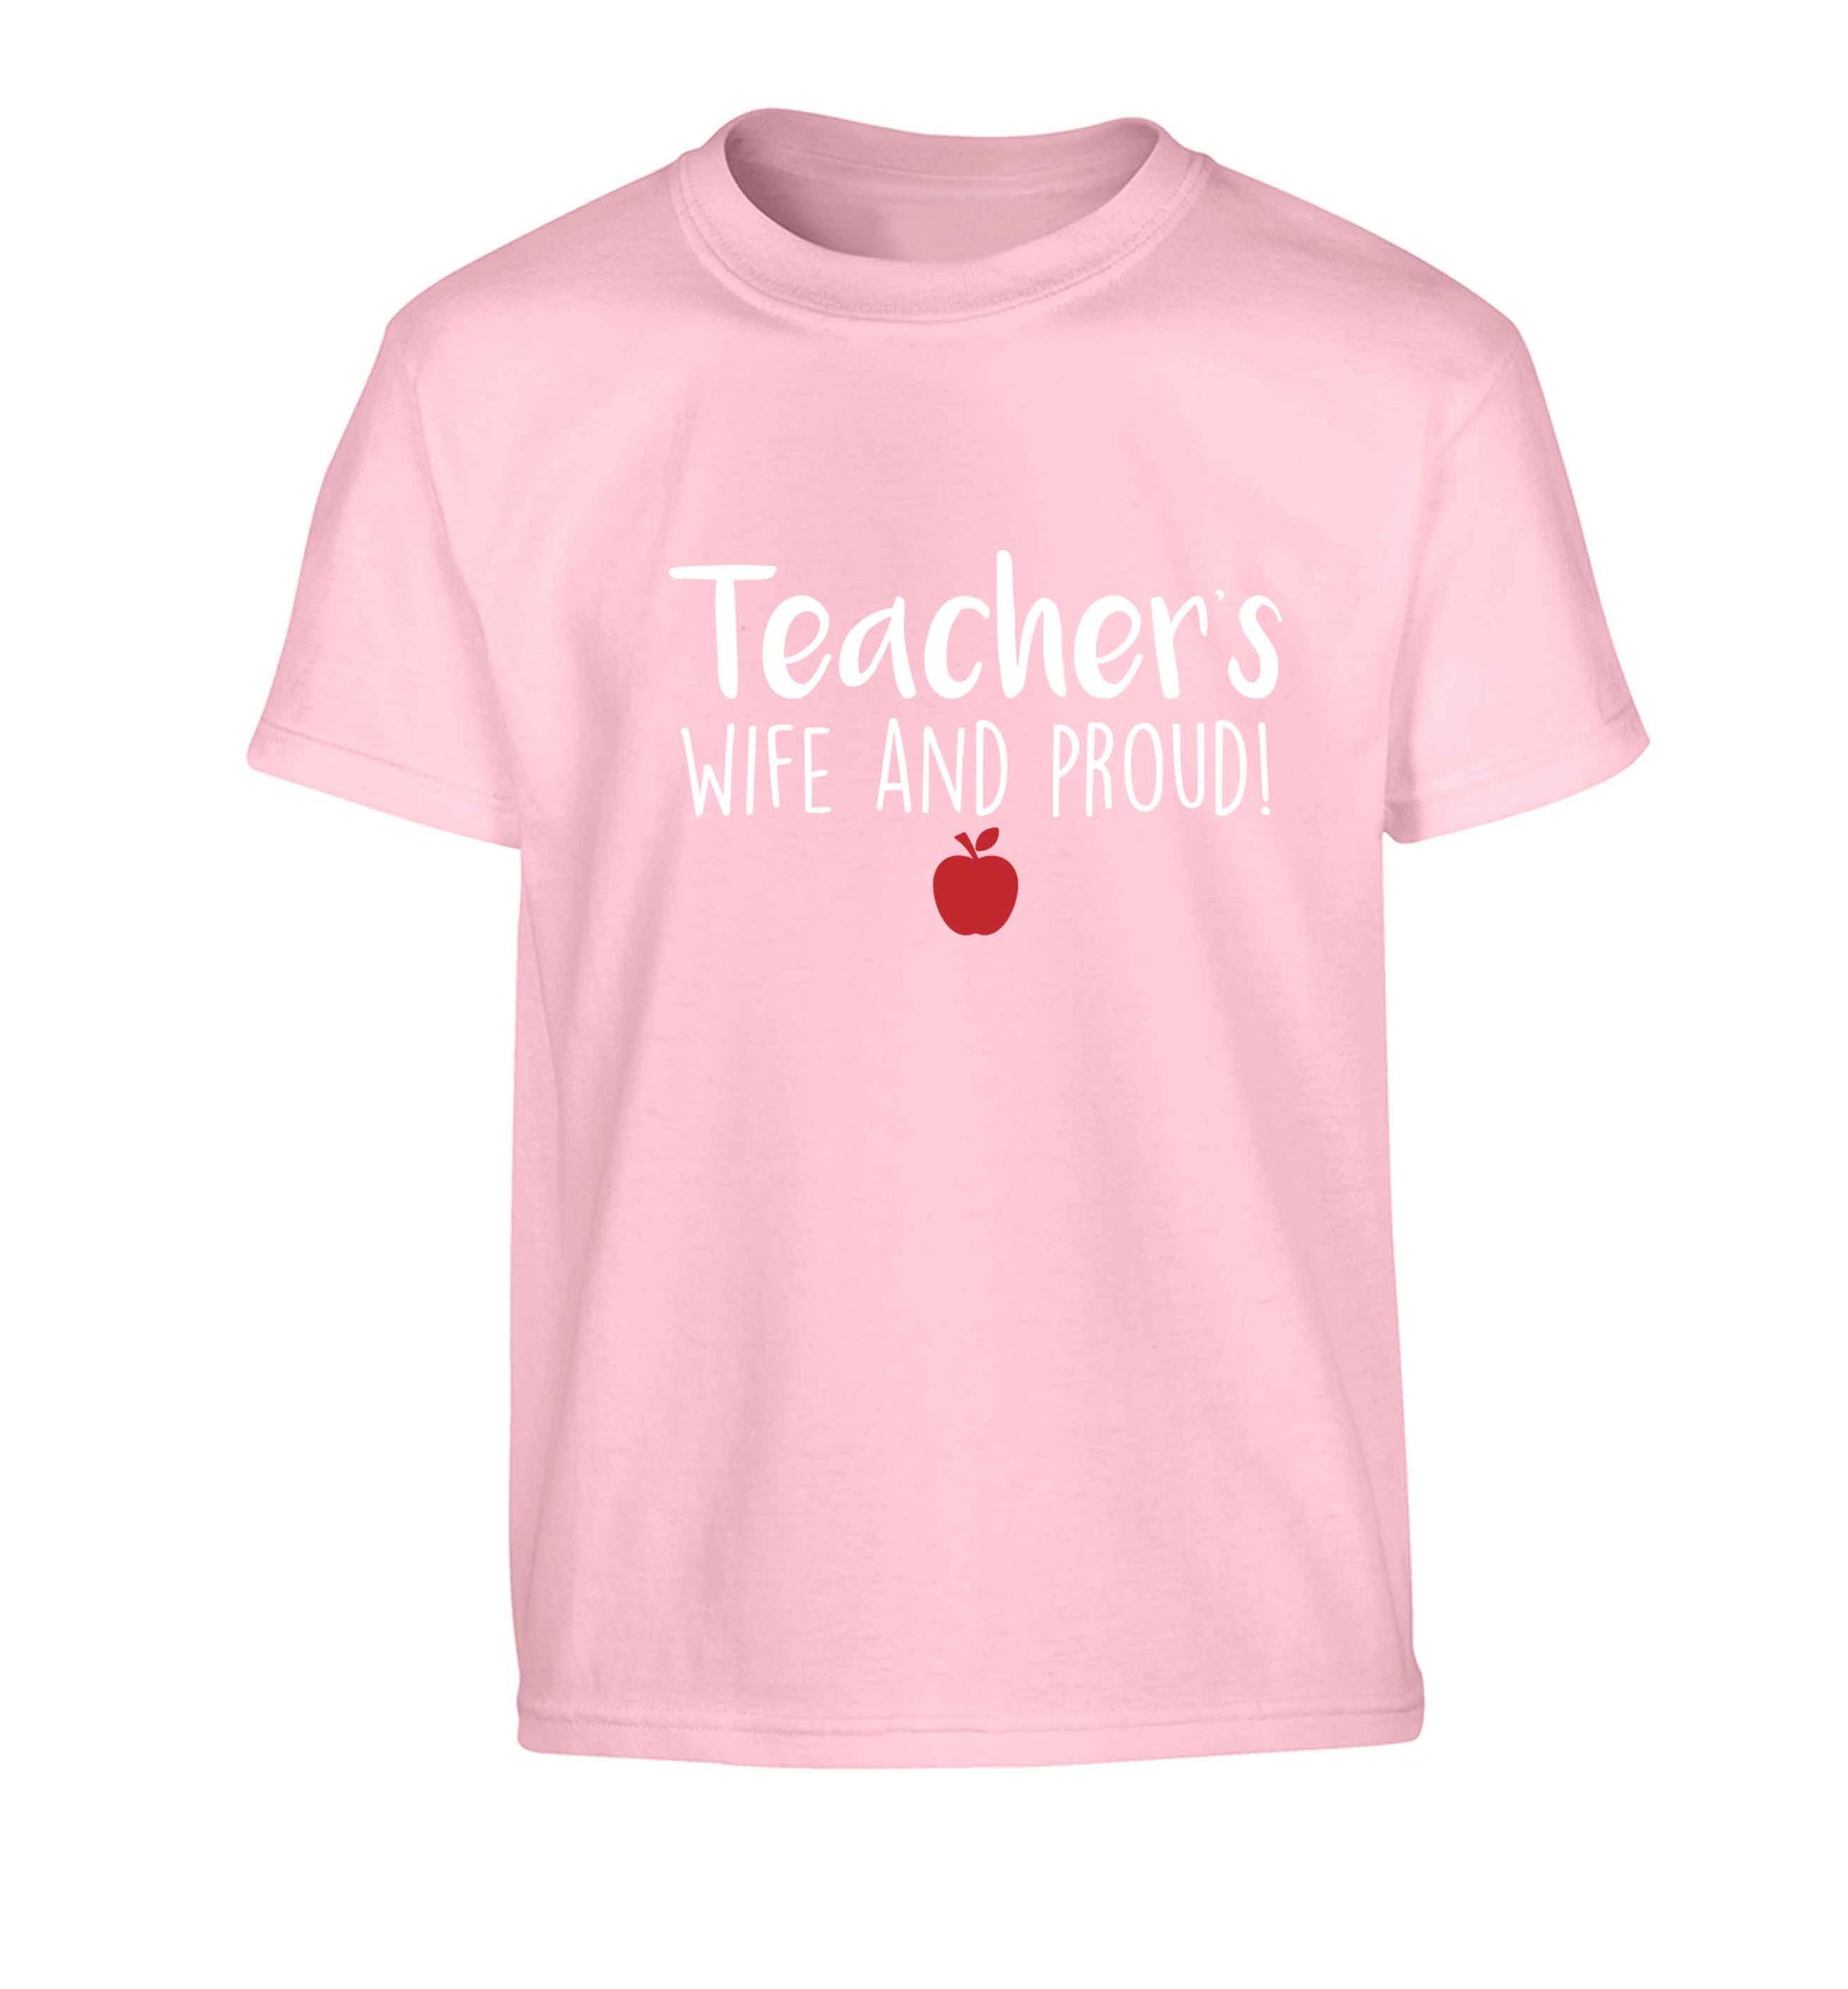 Teachers wife and proud Children's light pink Tshirt 12-13 Years